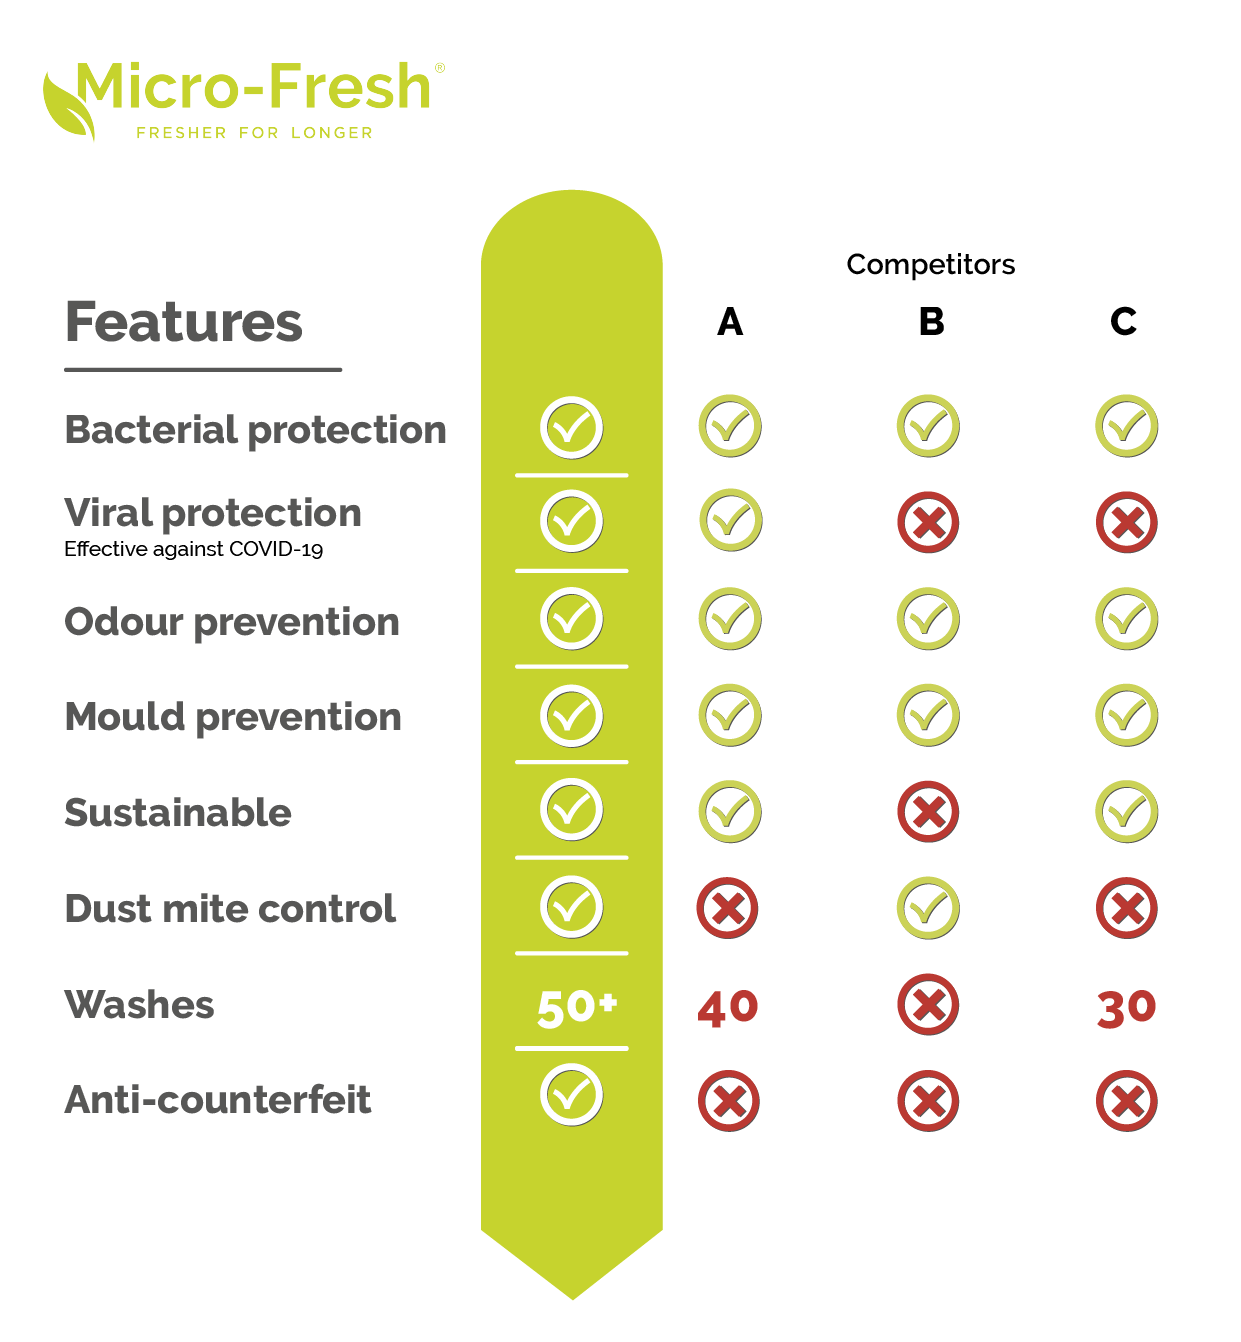 Microfresh Competitors Grid